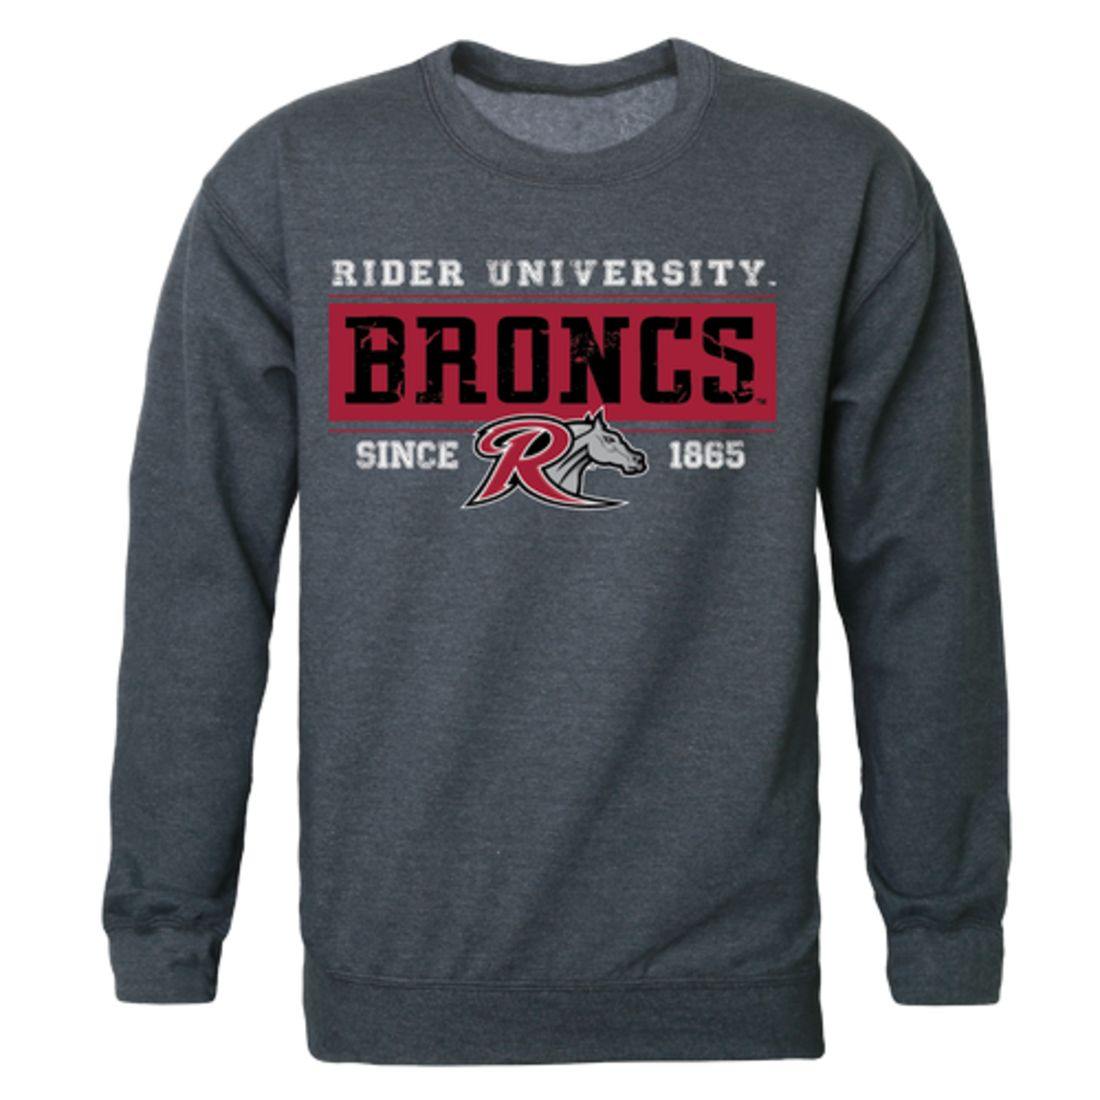 Rider University Broncs Established Crewneck Pullover Sweatshirt Sweater Heather Charcoal-Campus-Wardrobe